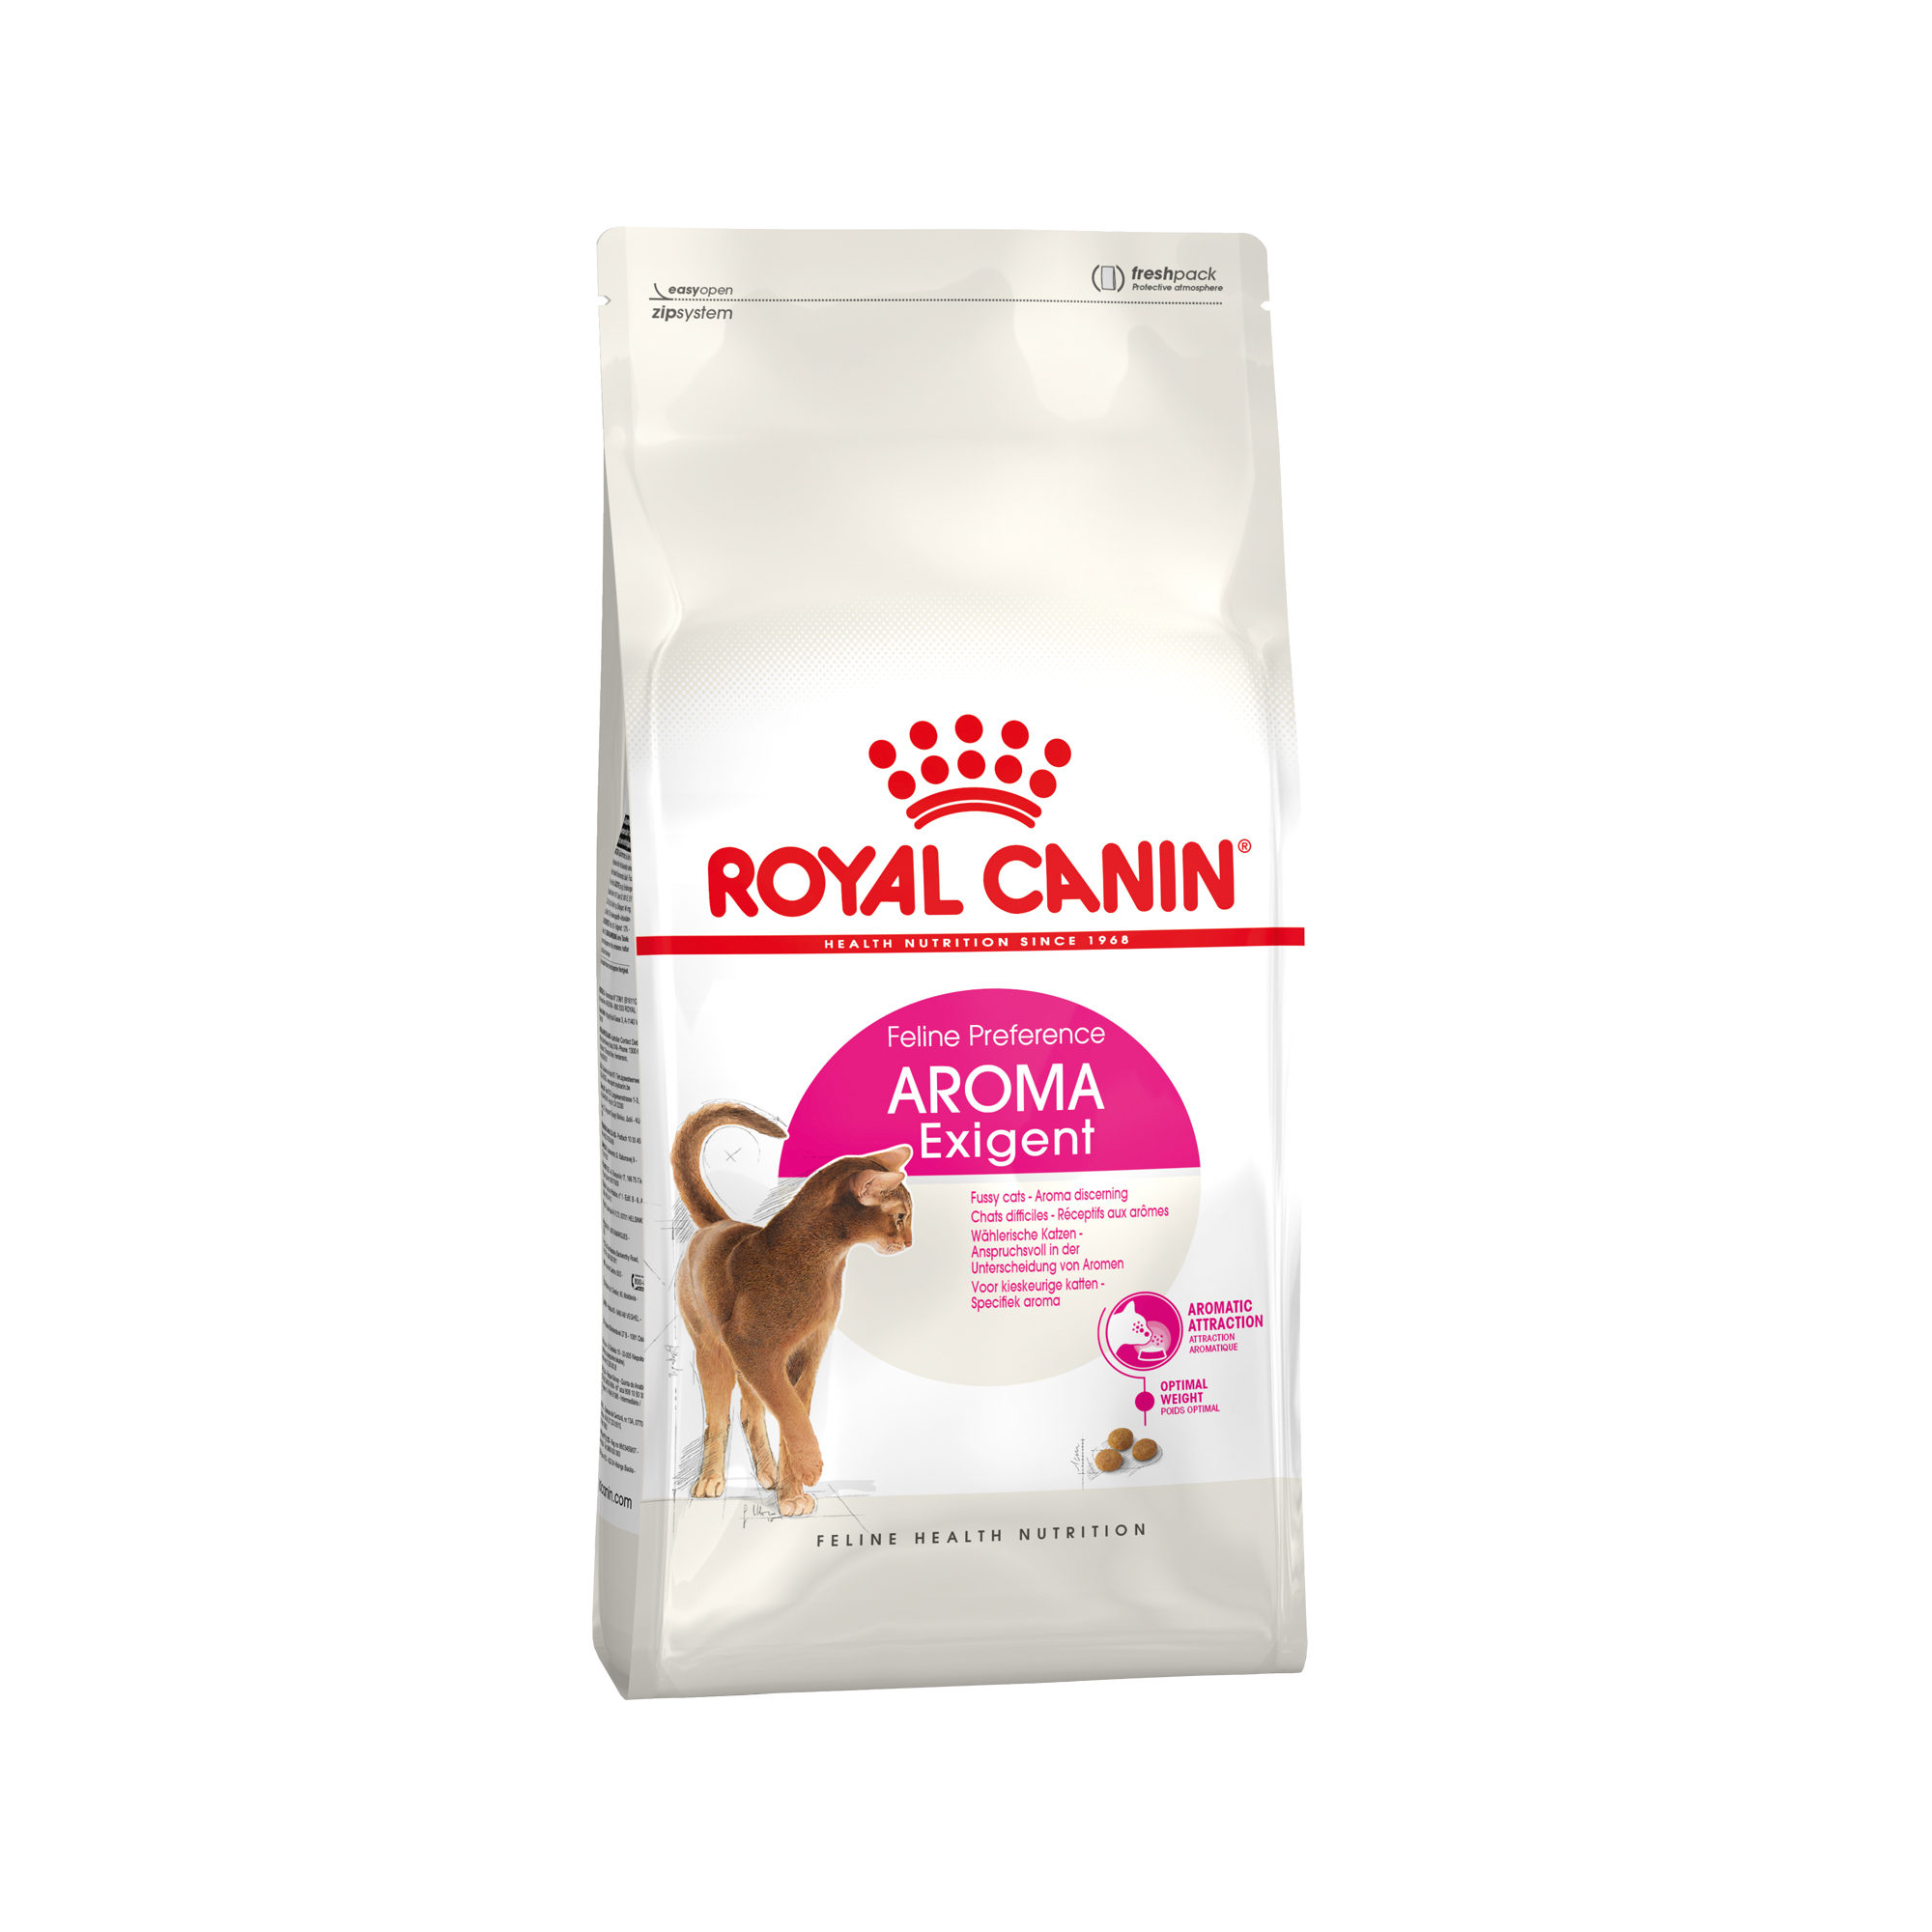 Royal Canin Aroma Exigent Katzenfutter - 4 kg